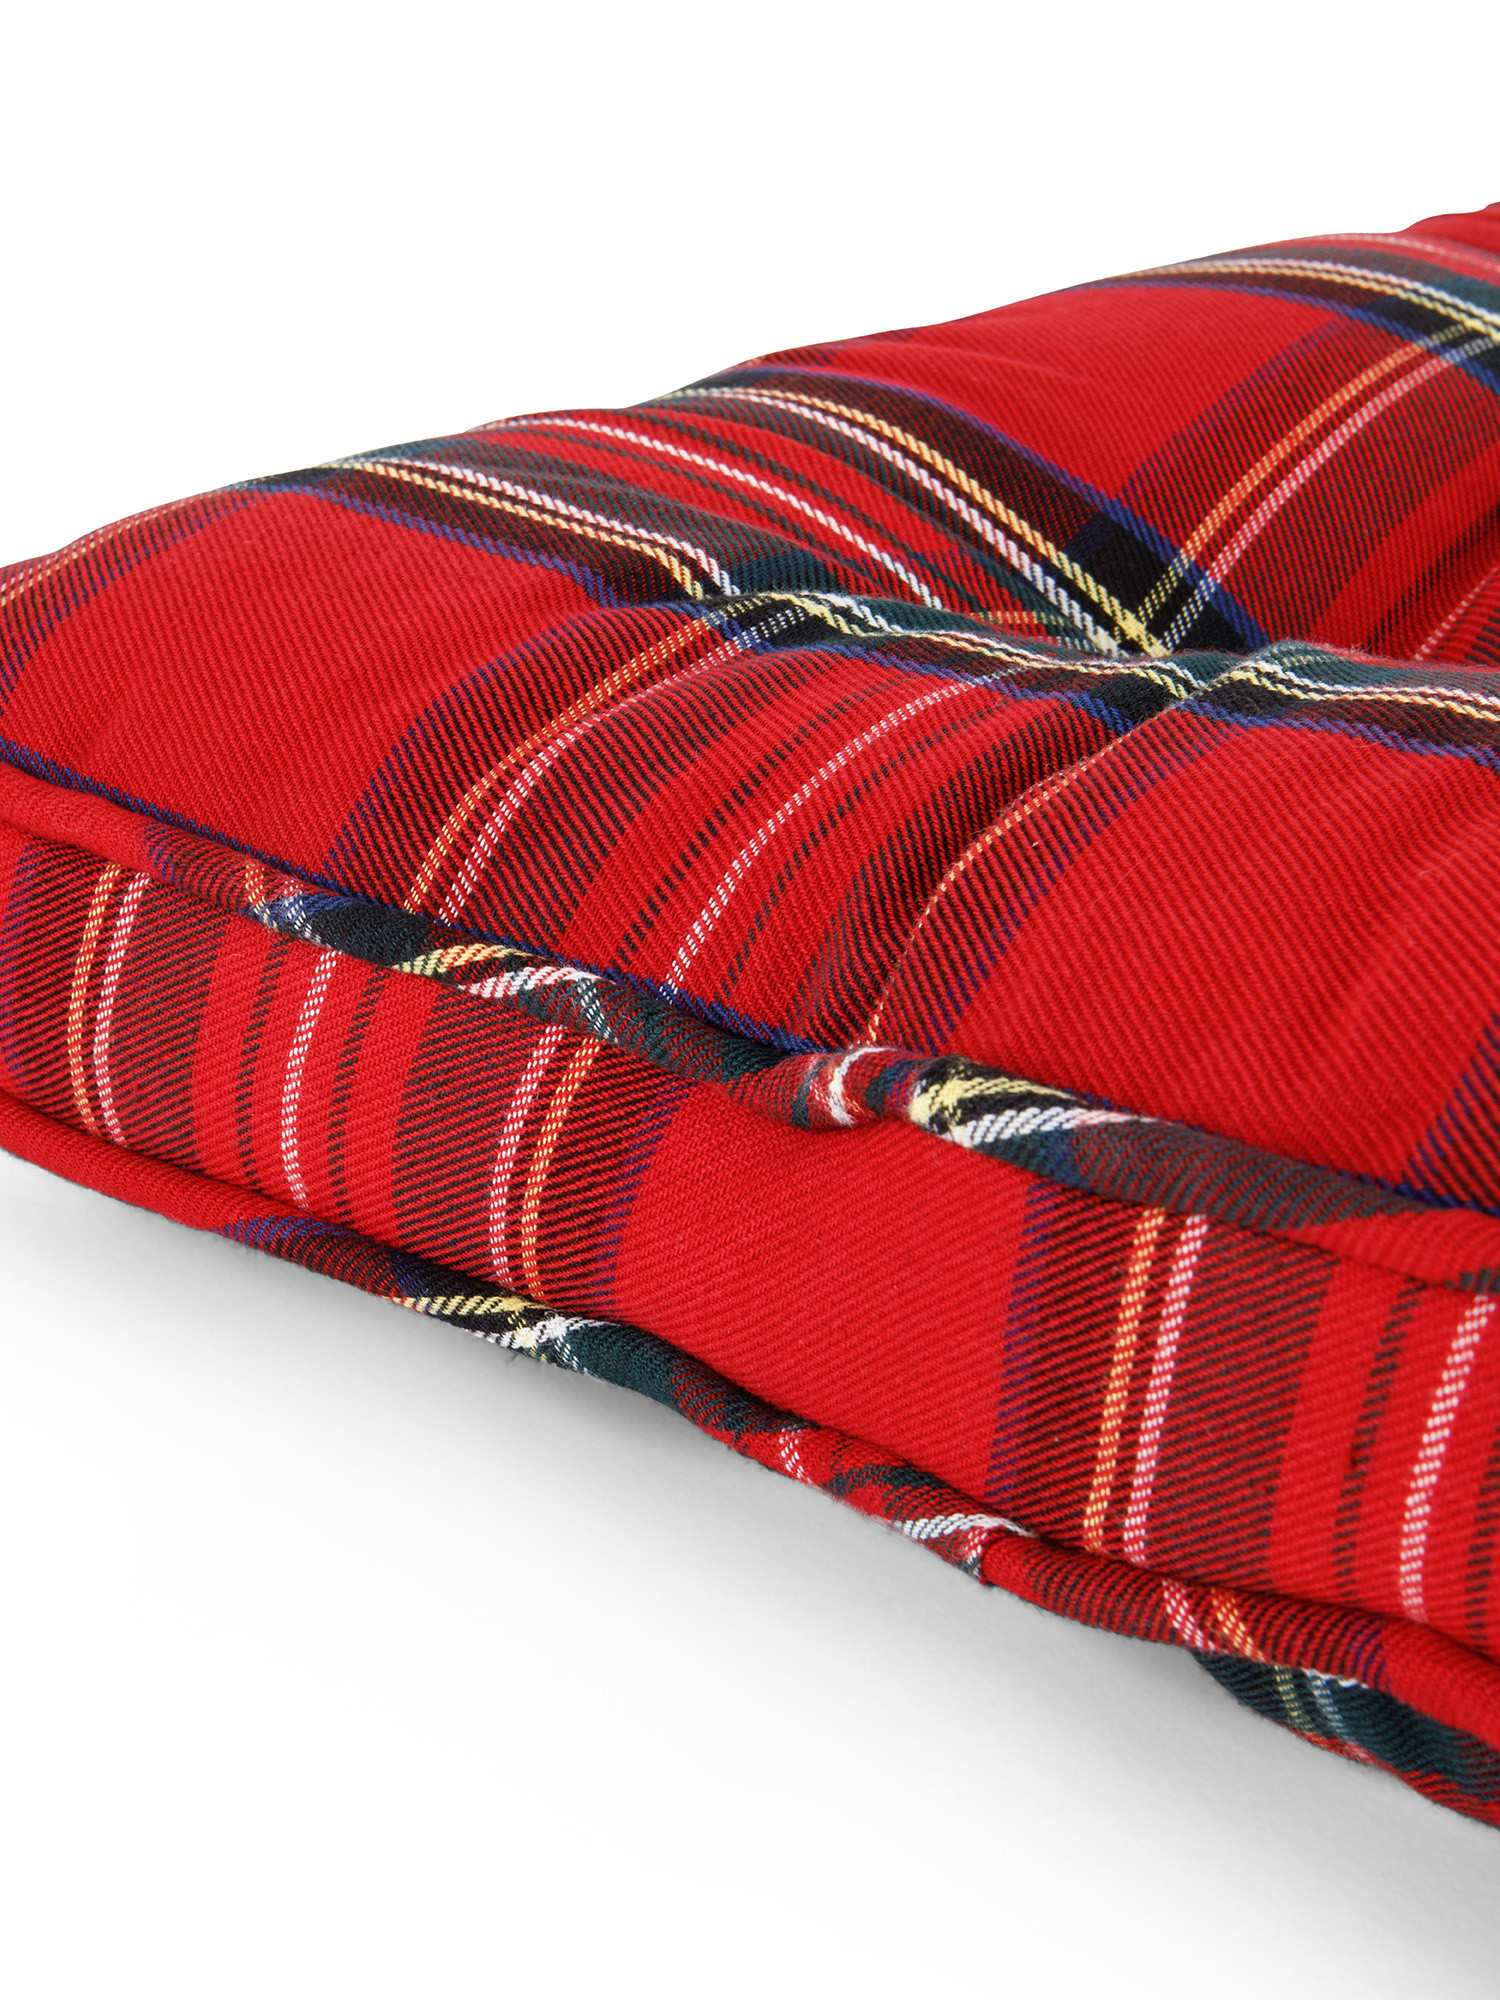 Tartan cotton twill seat cushion, Red, large image number 1